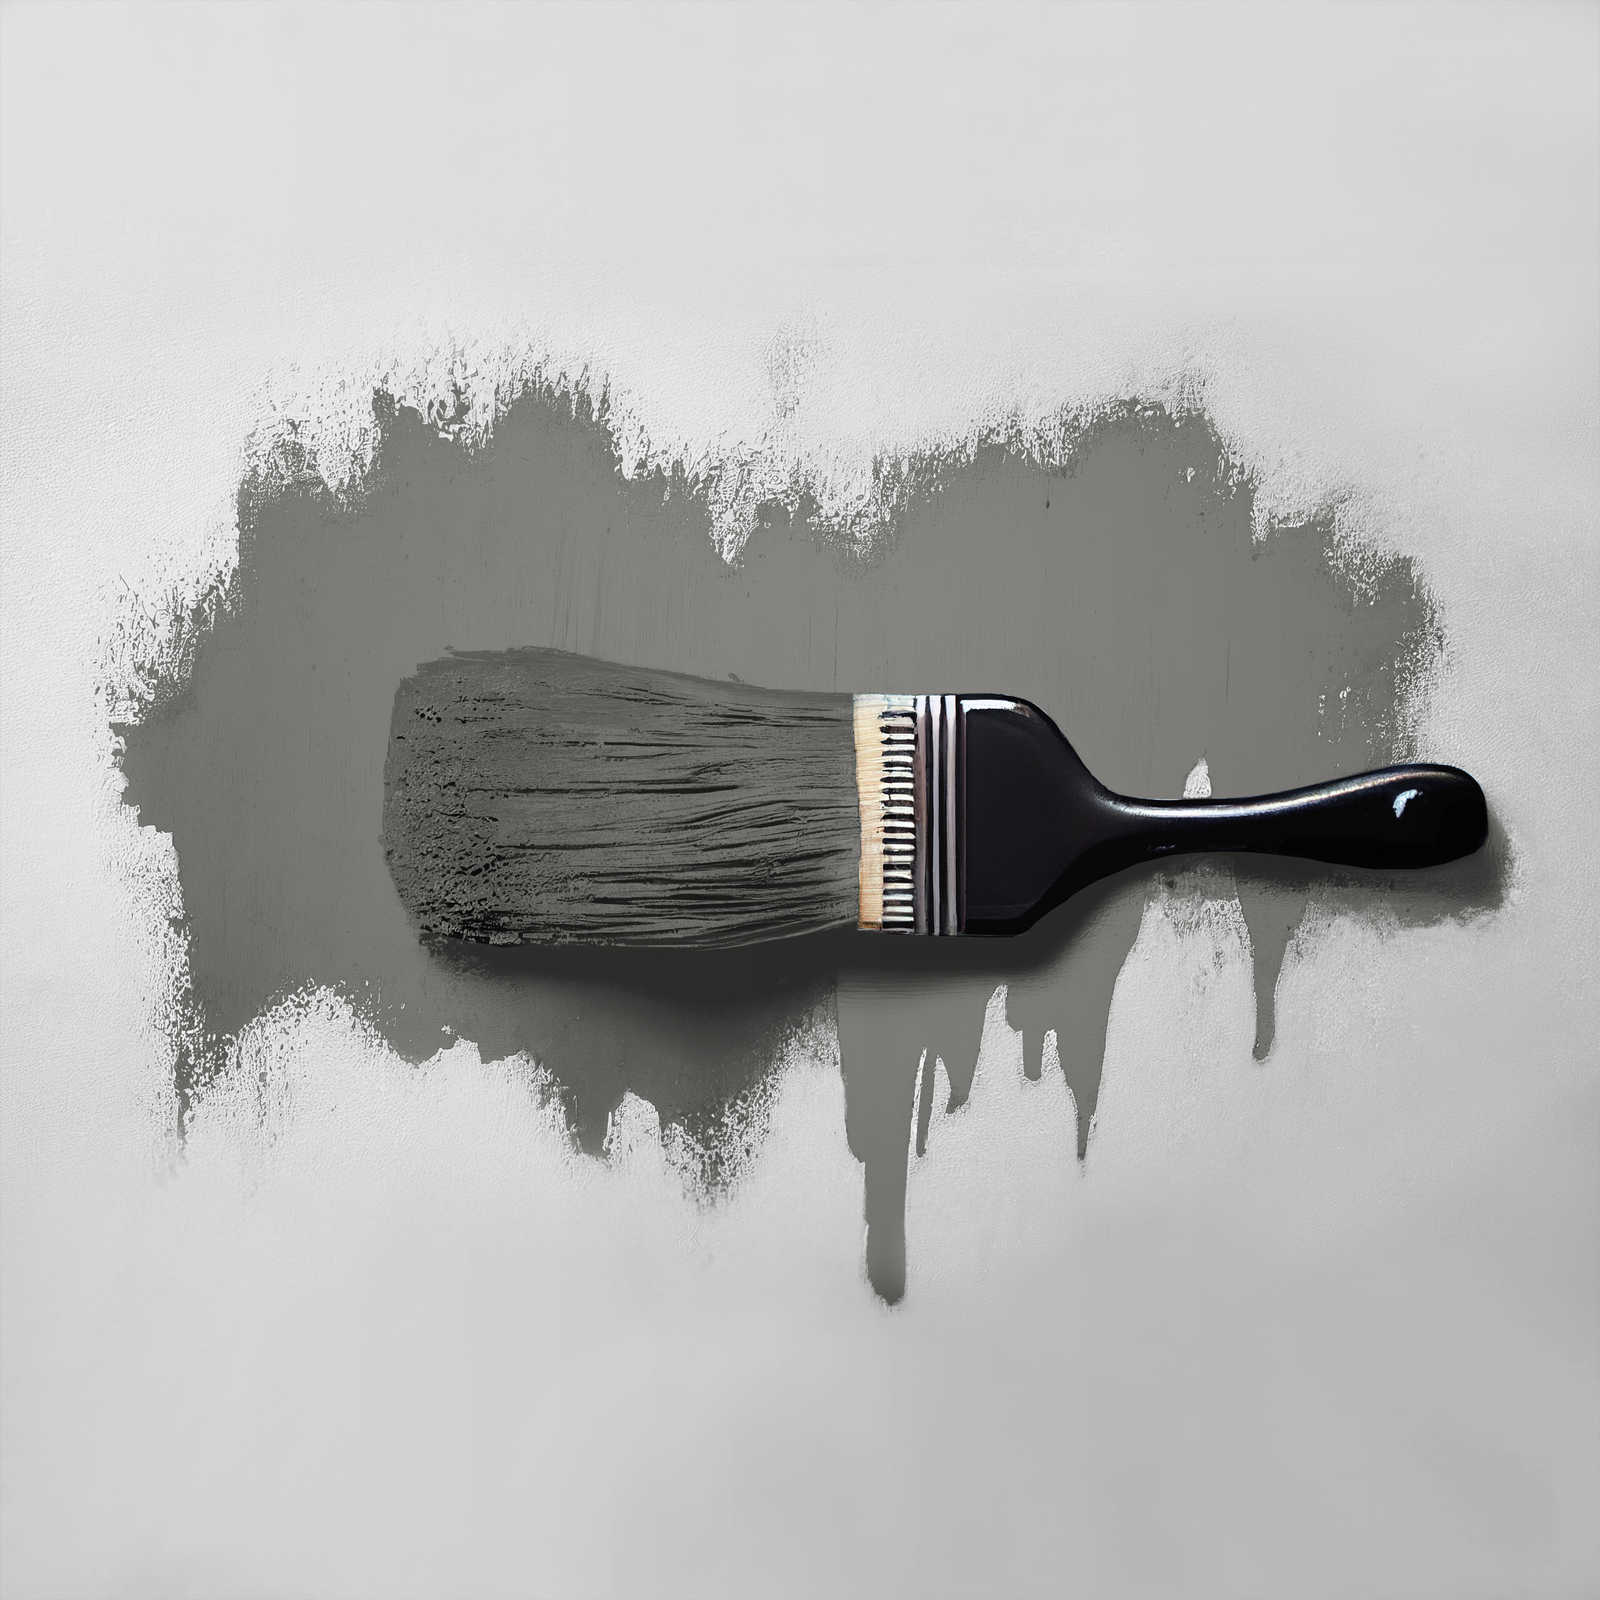             Pintura mural TCK1013 »Poised Pepper« en gris oscuro – 5,0 litro
        